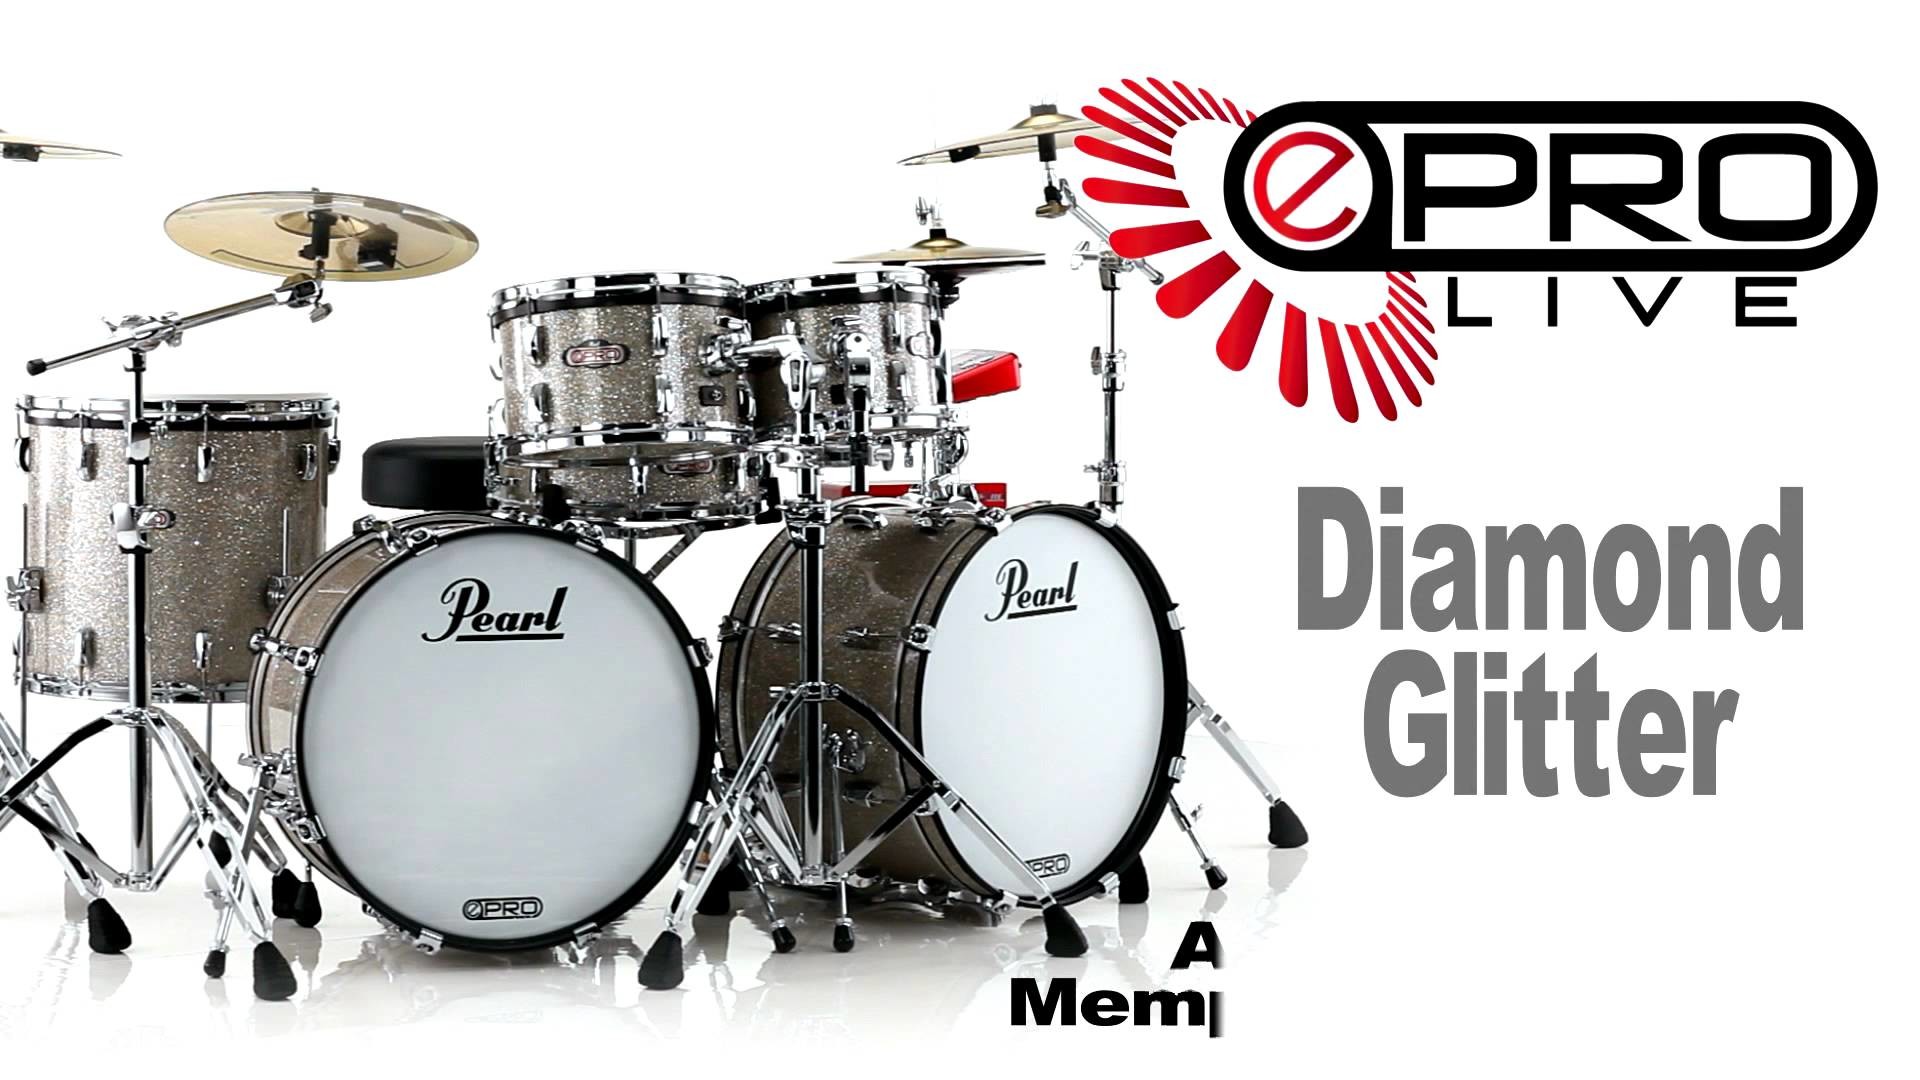 1920x1080 Pearl e-Pro Live Double Bass Electronic Drum Set - Diamond Glitter - YouTube